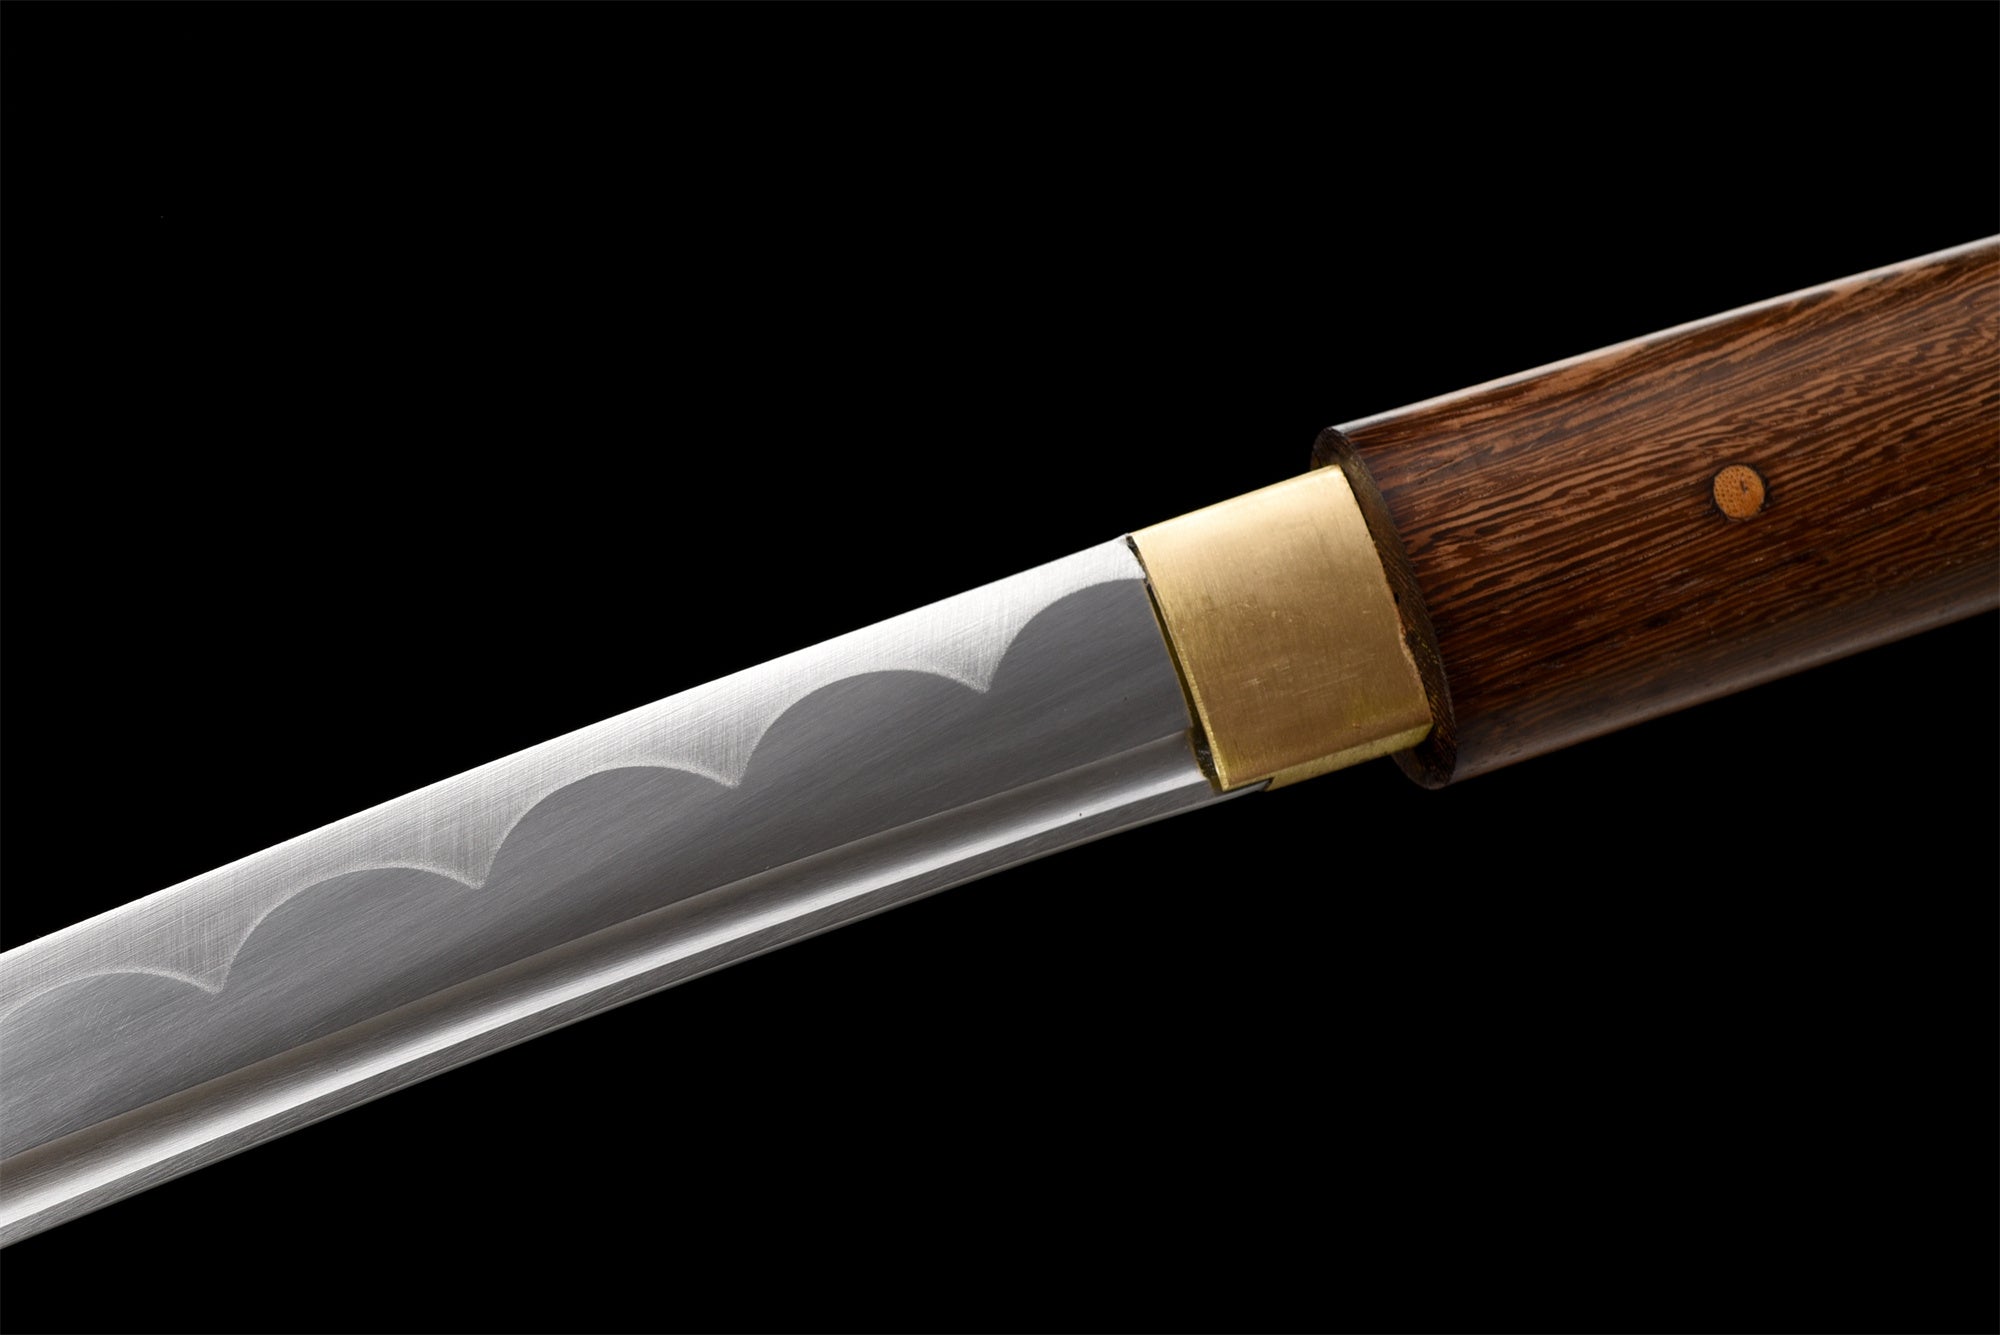 Hard Rosewood Katana,Handmade Stick Sword,Real Japanese Samurai Sword,High manganese steel,Full Tang